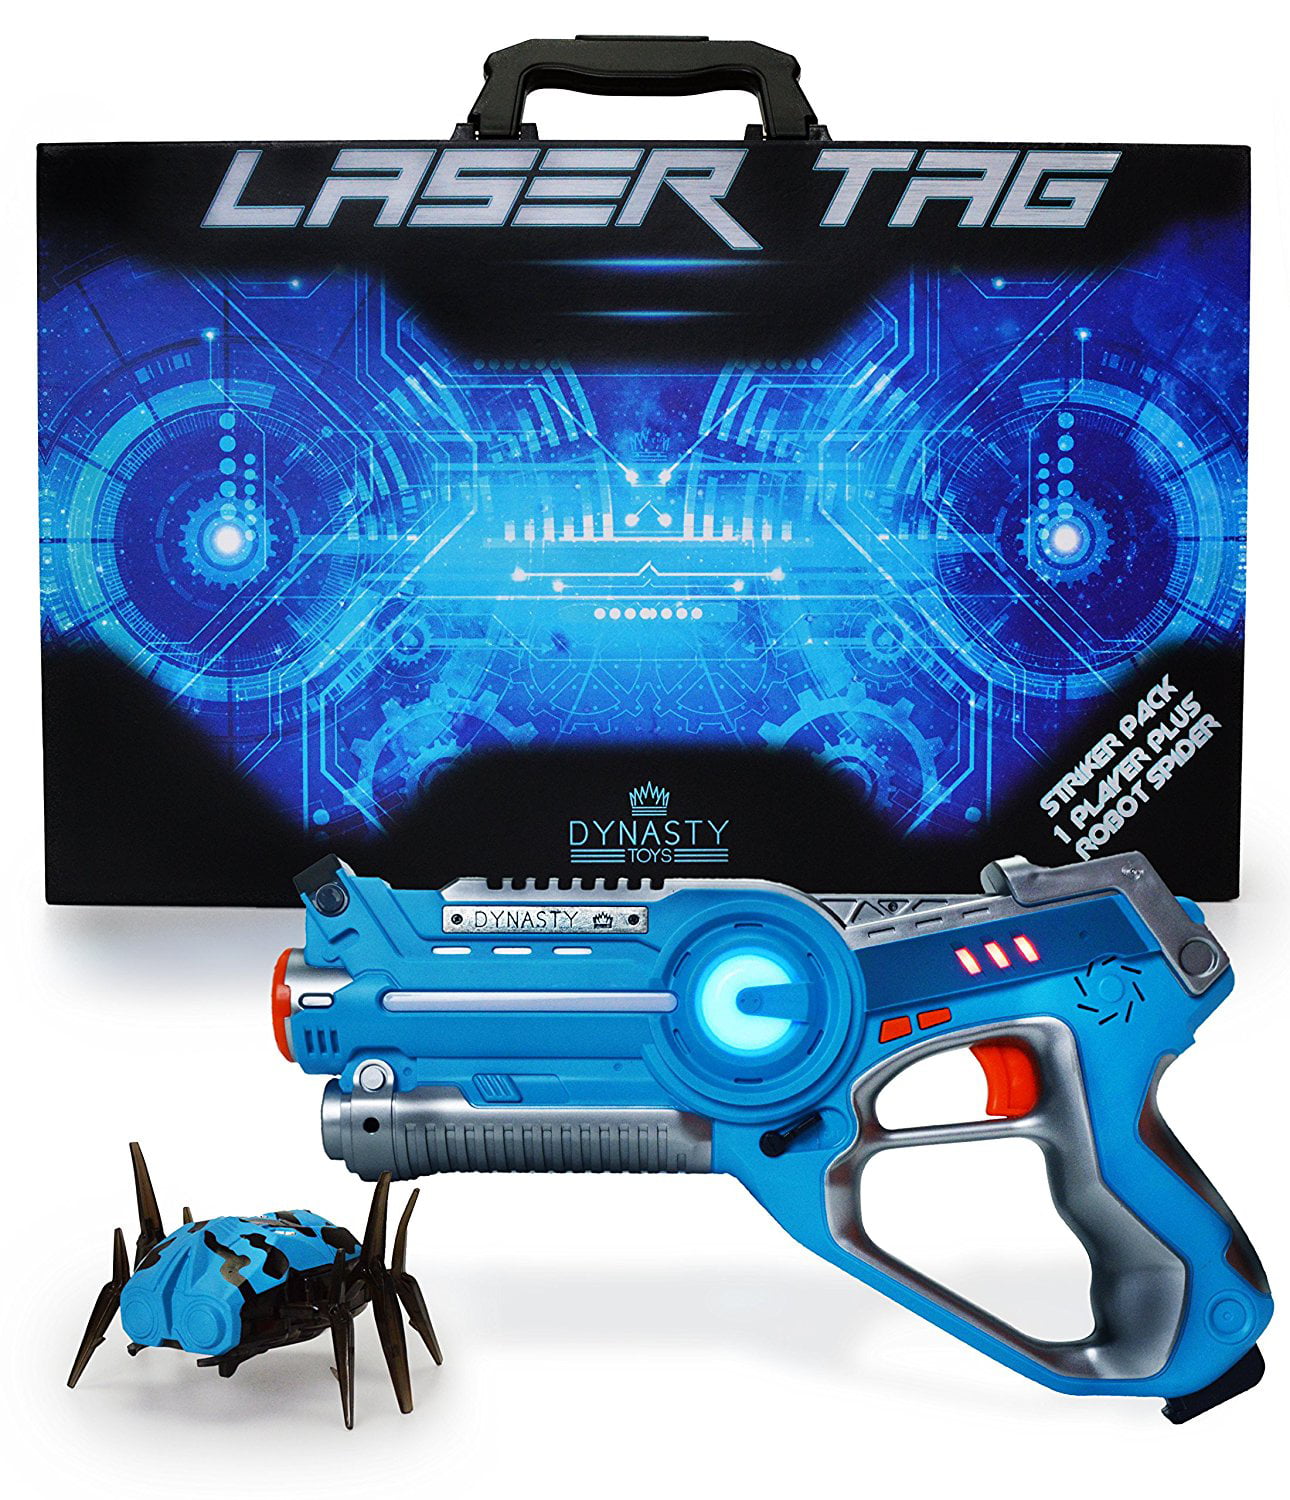 83dynasty Toys Laser Tag Blaster and Robot Nano Bug Striker Christmas for sale online 